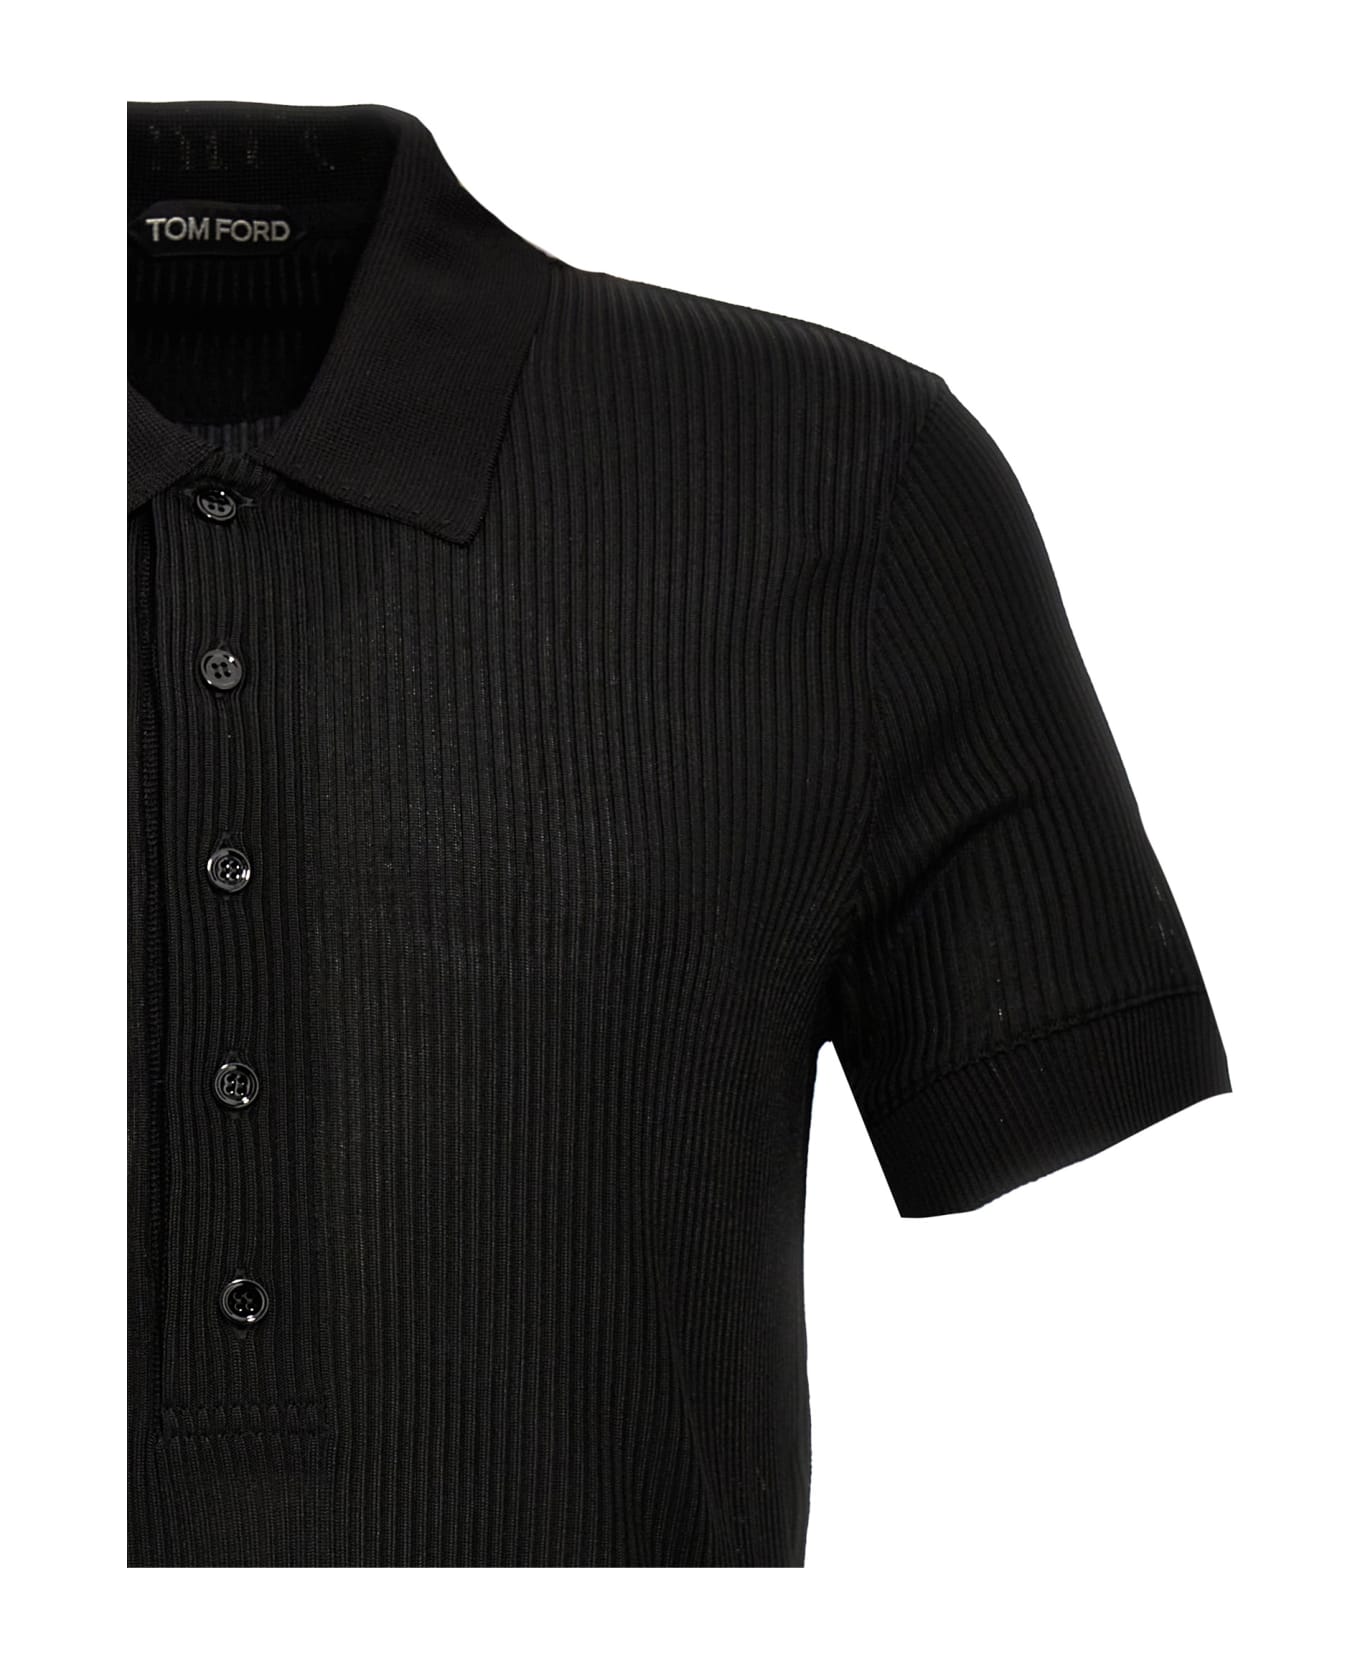 Tom Ford Ribbed Polo Shirt - Nero ポロシャツ